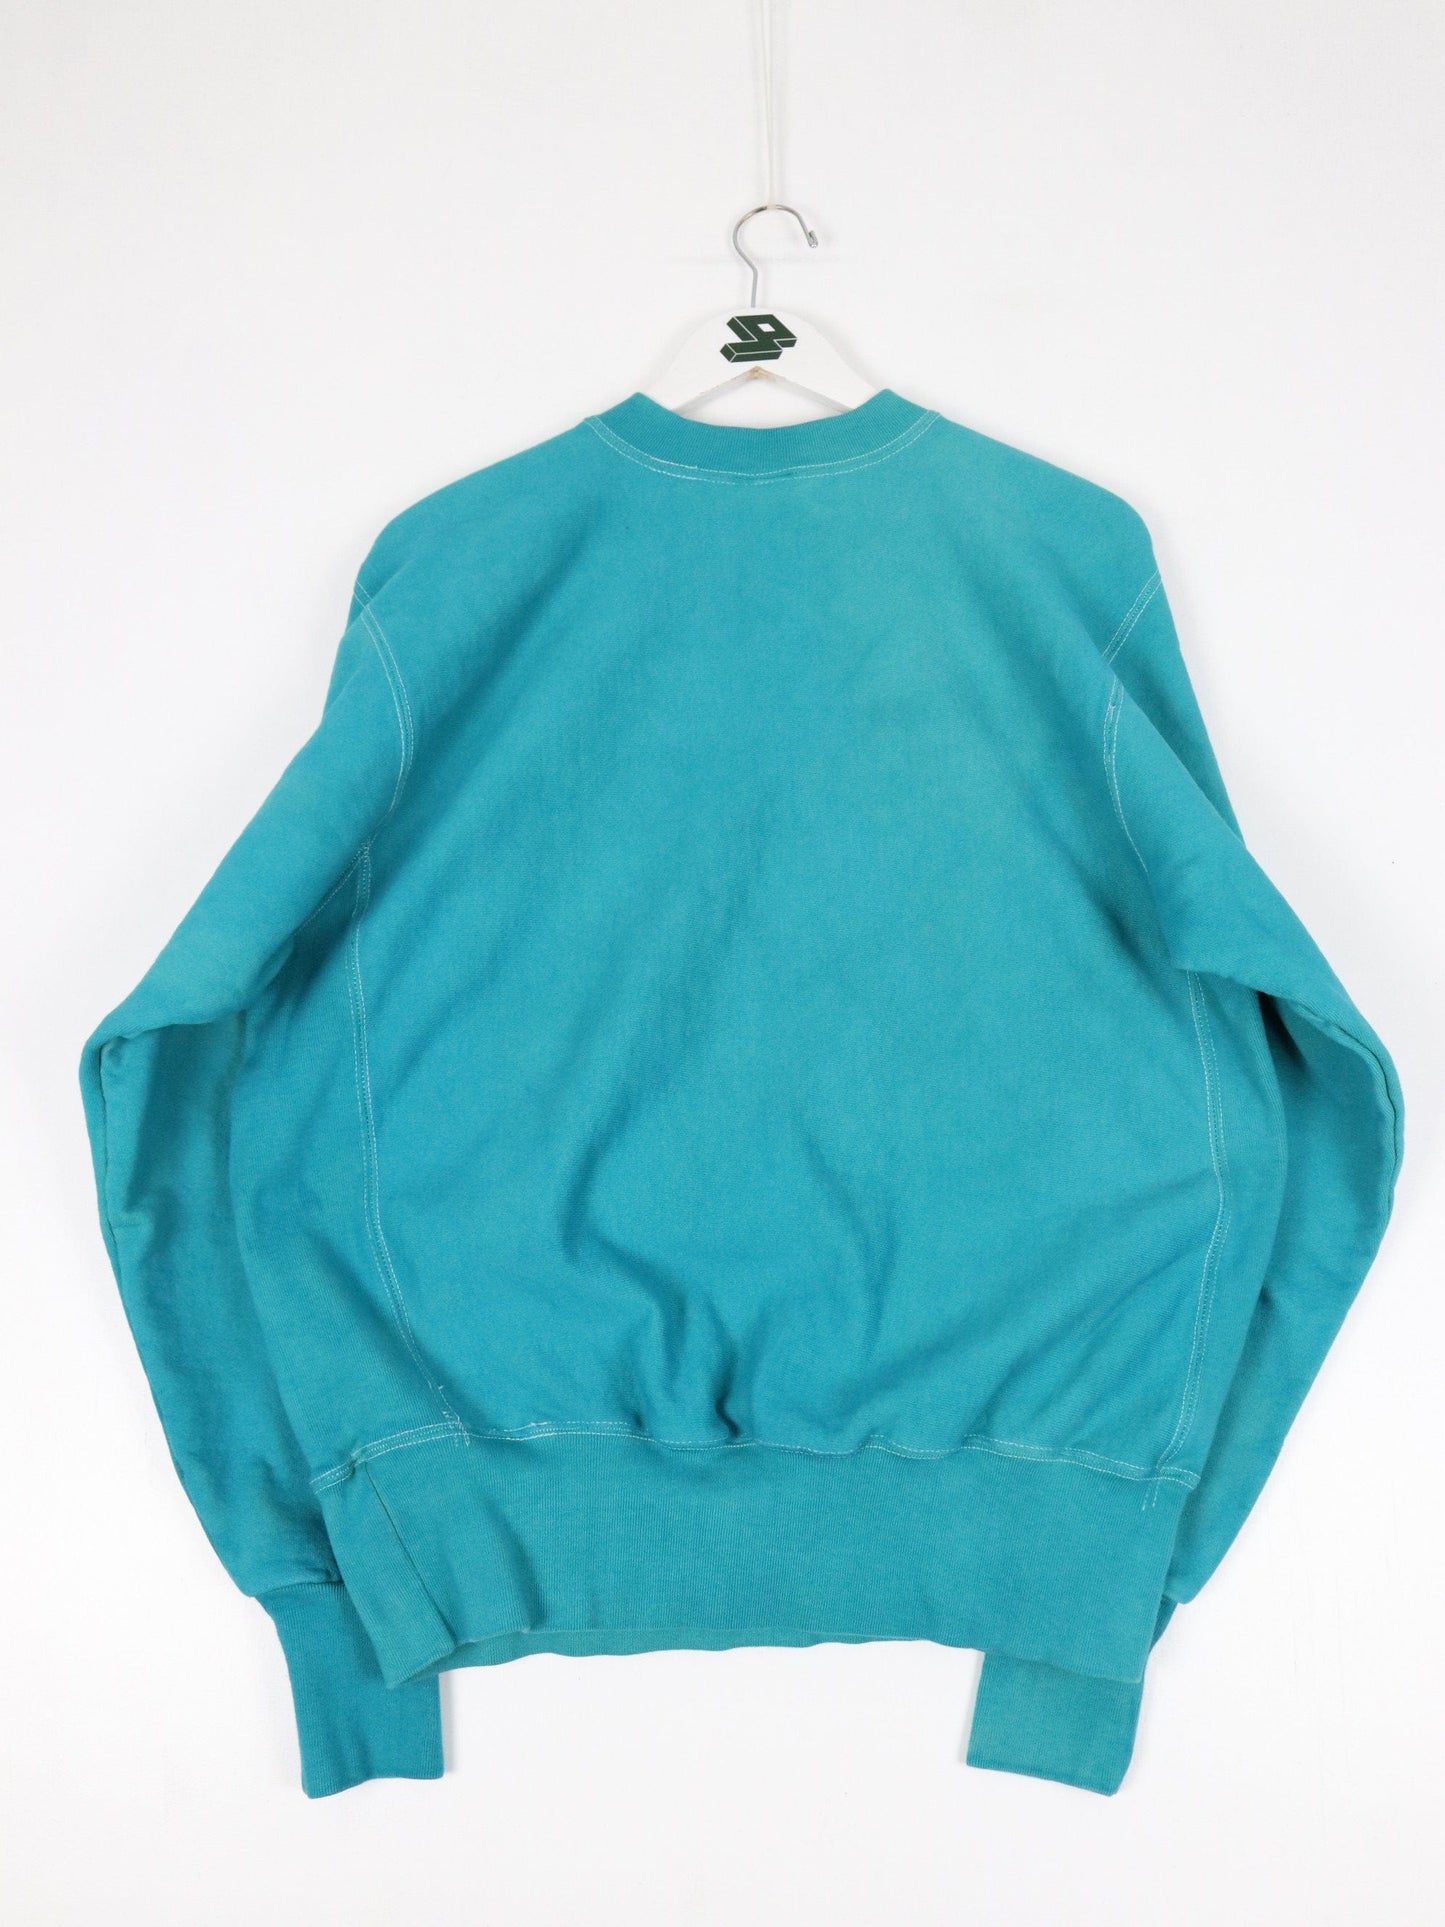 Other Sweatshirts & Hoodies Vintage Rugged Sweats Sweatshirt Mens Large Blue Logo Sweater 90s